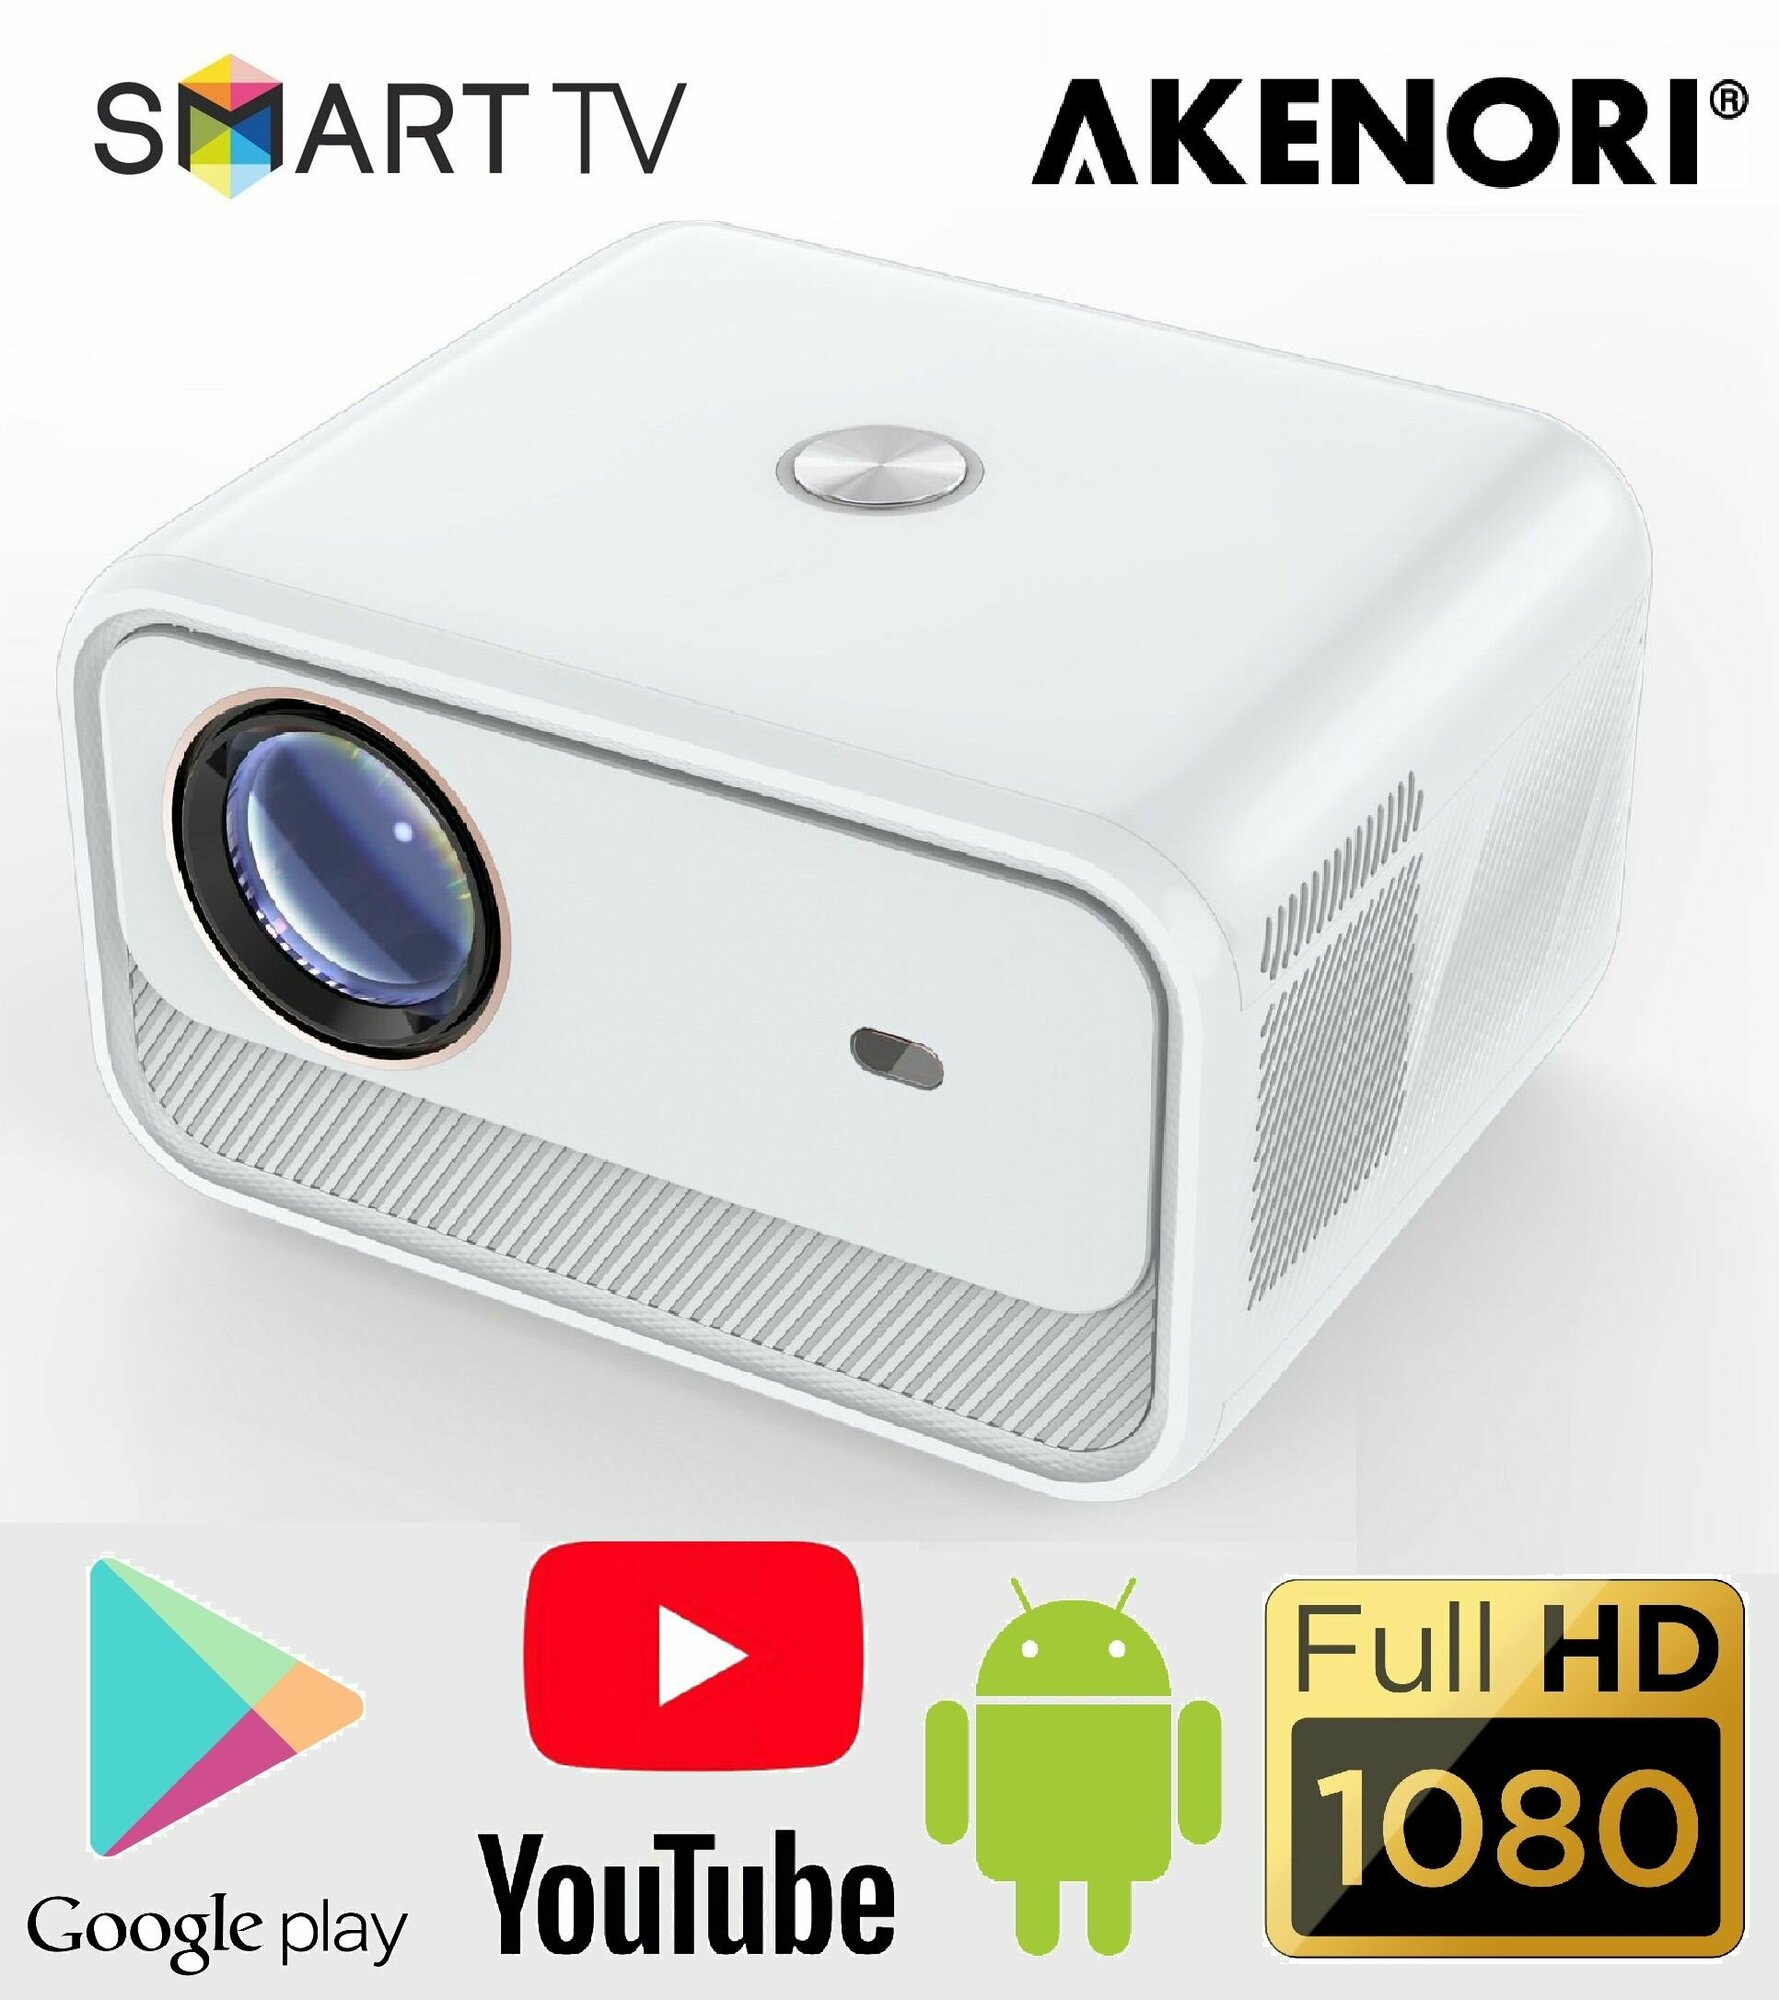 Проектор для домашнего кинотеатра на системе Андройд Akenori Android, проэктор, портативный проектор, проектор мультимедийный, проектор ярче xiaomi, Wanbo и Umiio LED-320W SMART Android TV